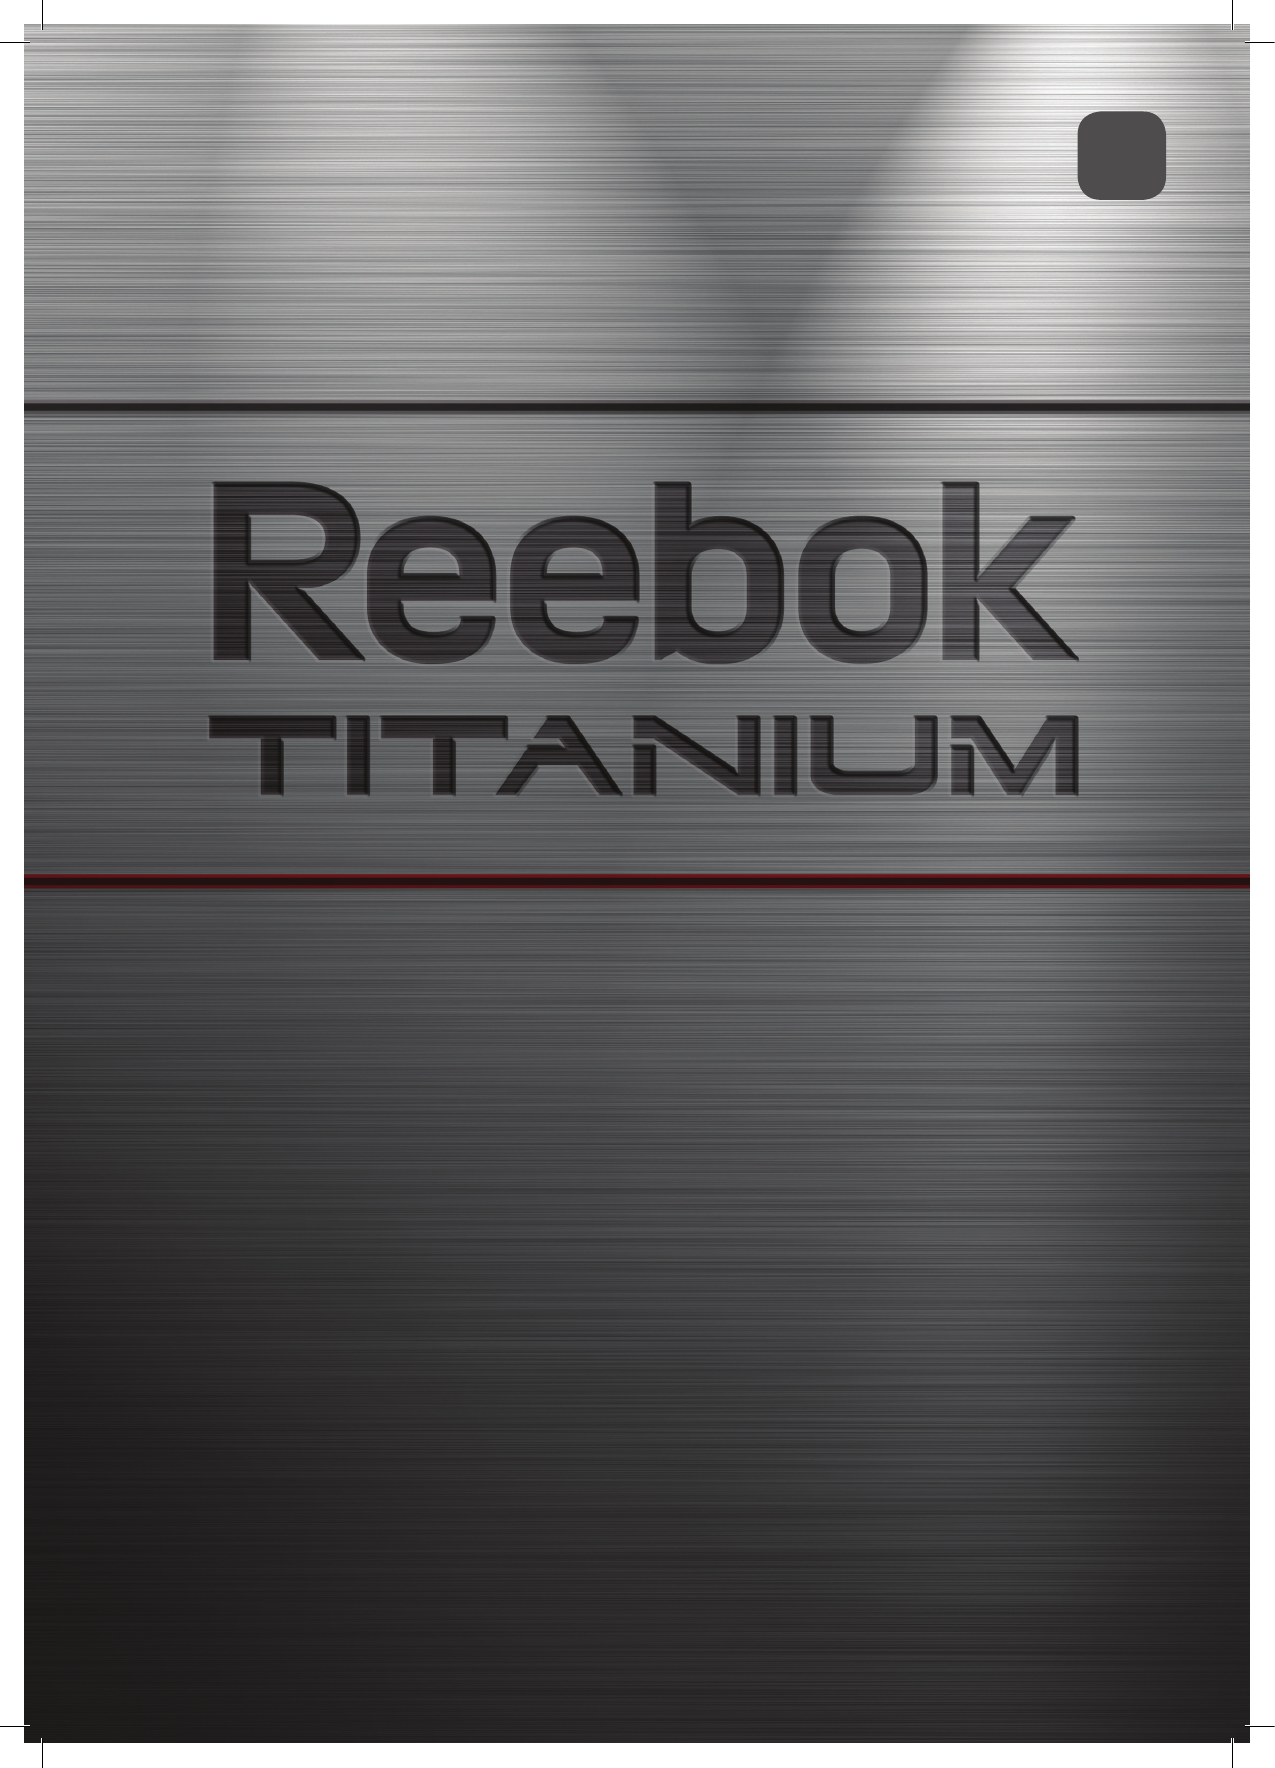 Vie logik forretning Reebok TX1.0 Cross Trainer TITANIUM User Manual - Libble.eu